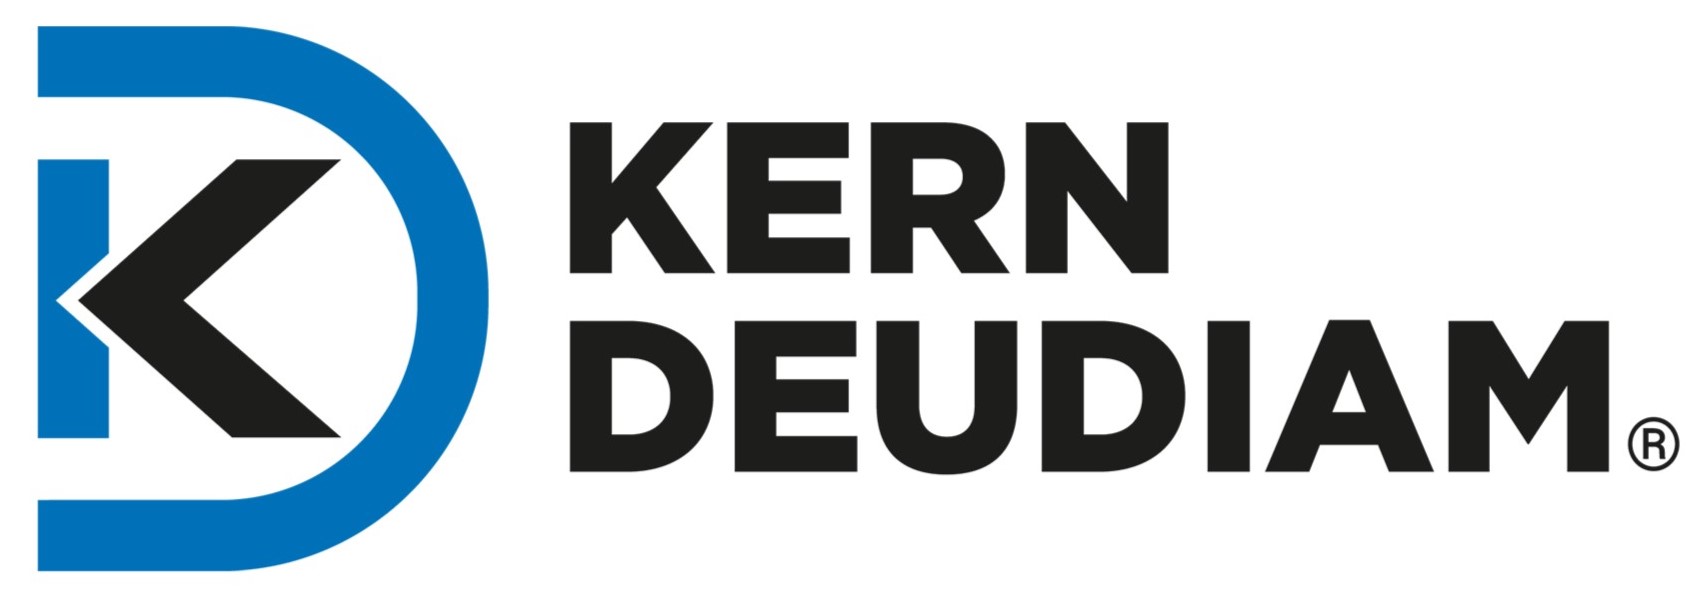 Kern Deudiam logo